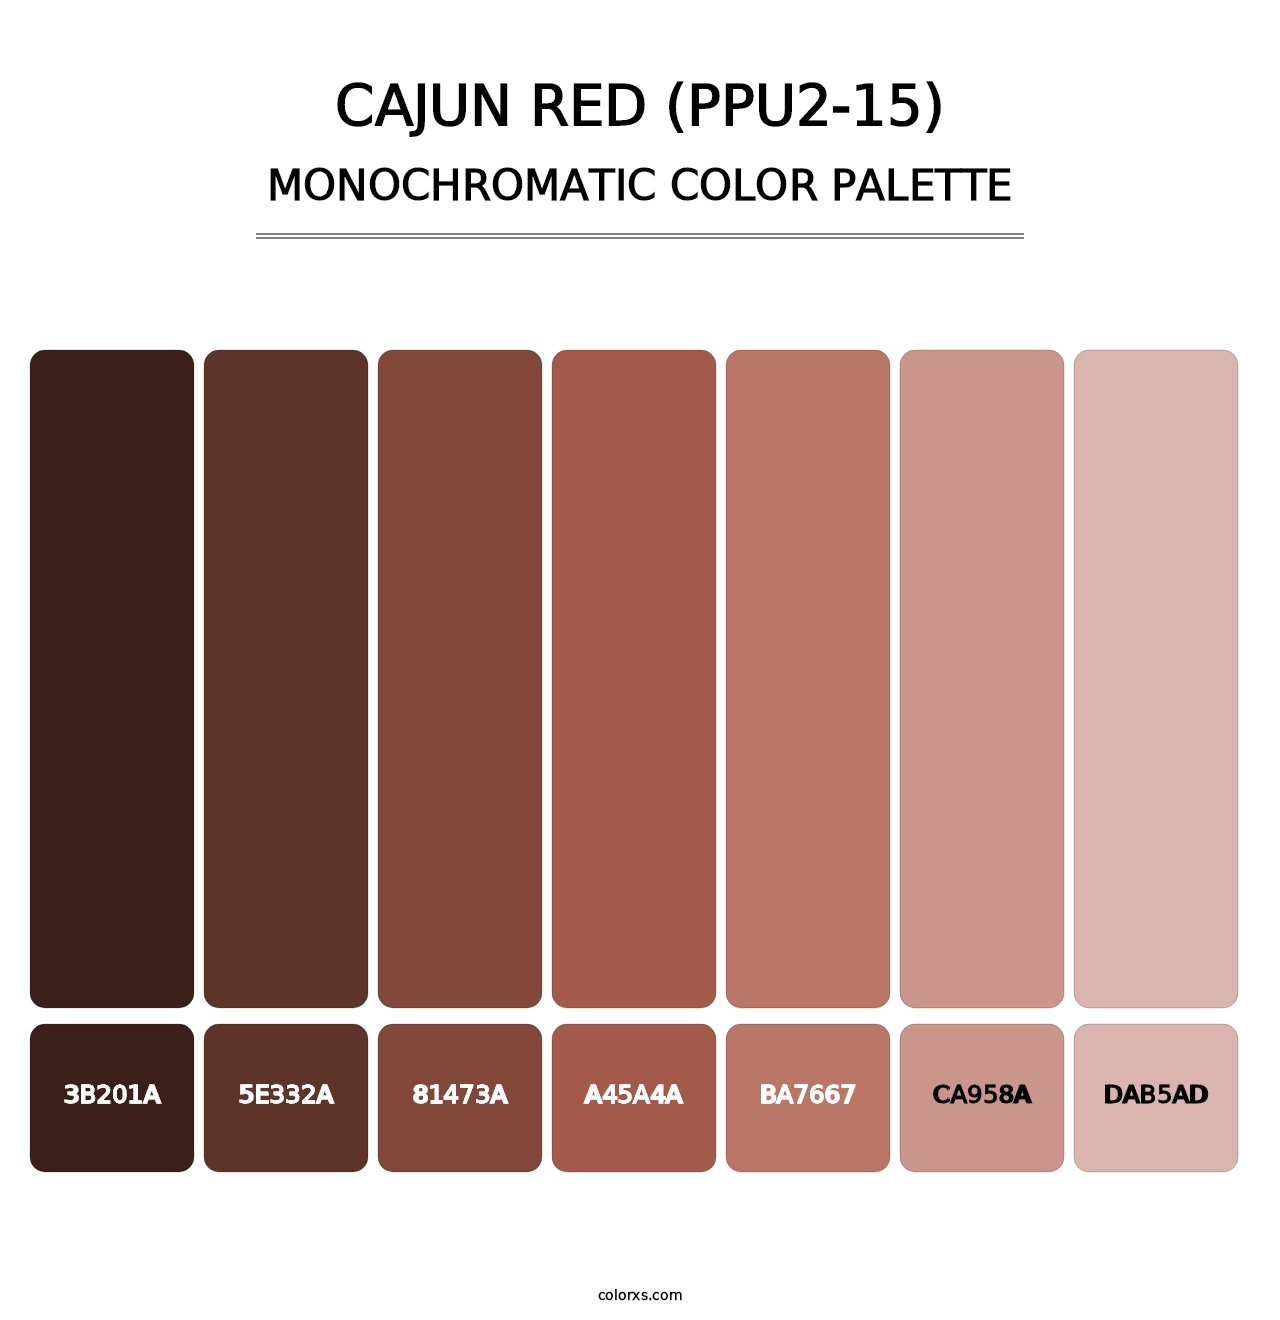 Cajun Red (PPU2-15) - Monochromatic Color Palette